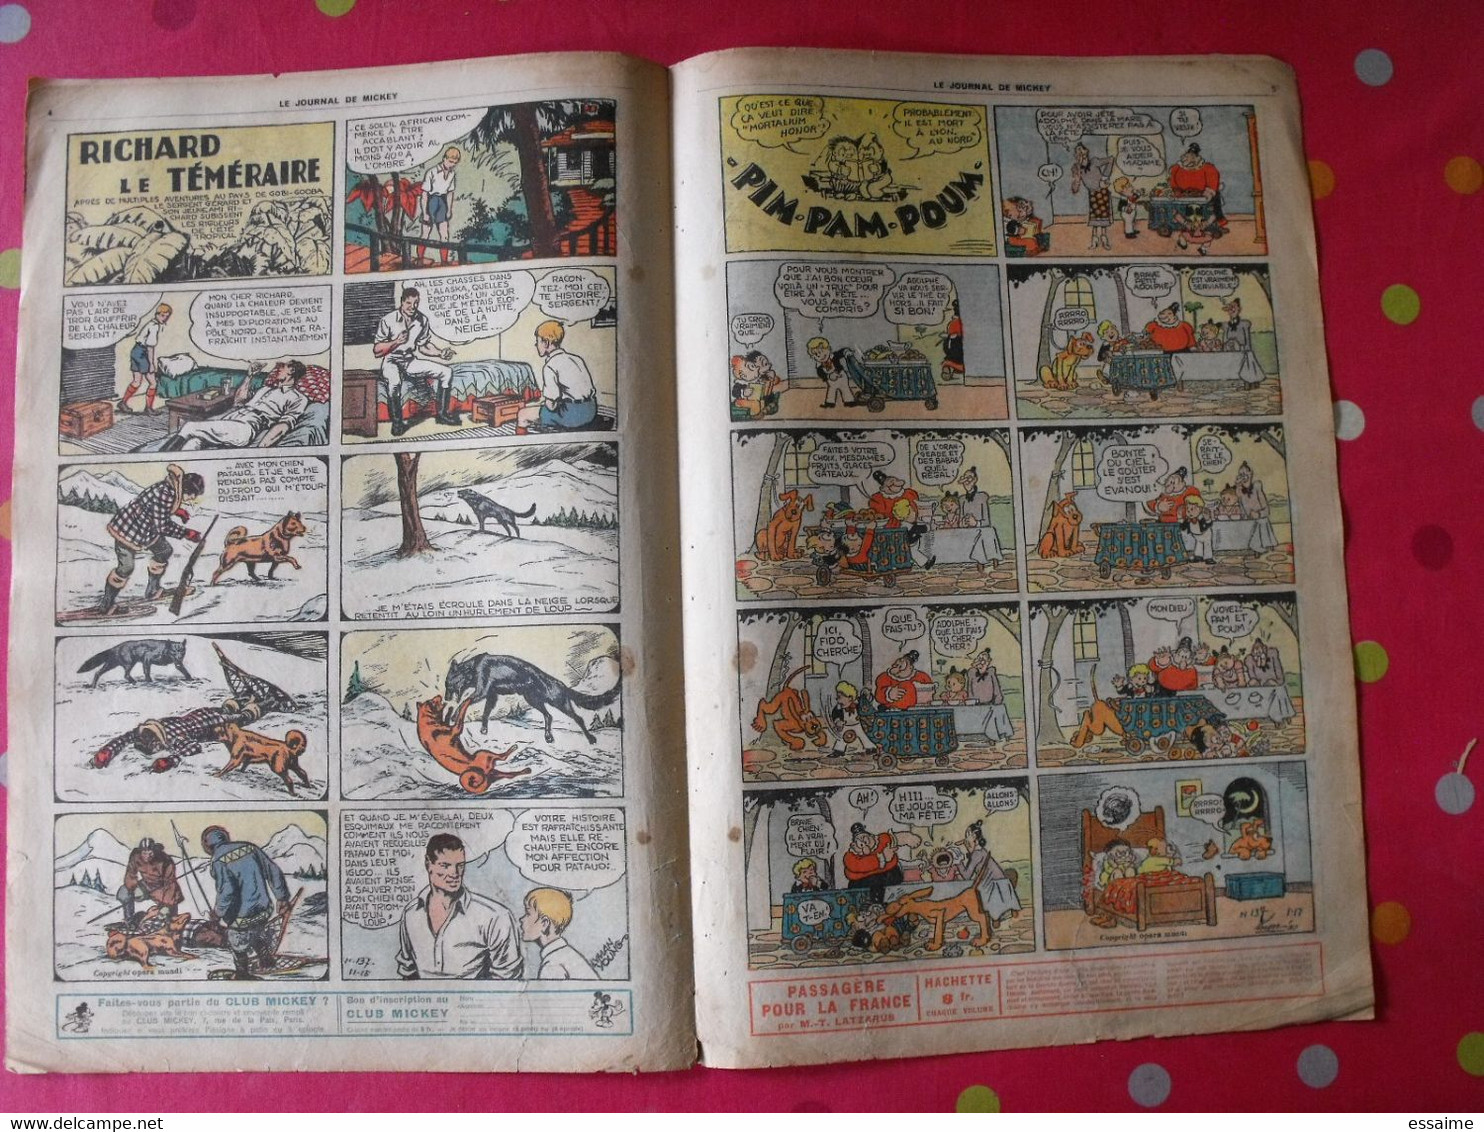 5 N° Du Journal De Mickey 1937. Jojo Richard Jim La Jungle Malheurs D'annie Donald Cora Tempête. - Journal De Mickey